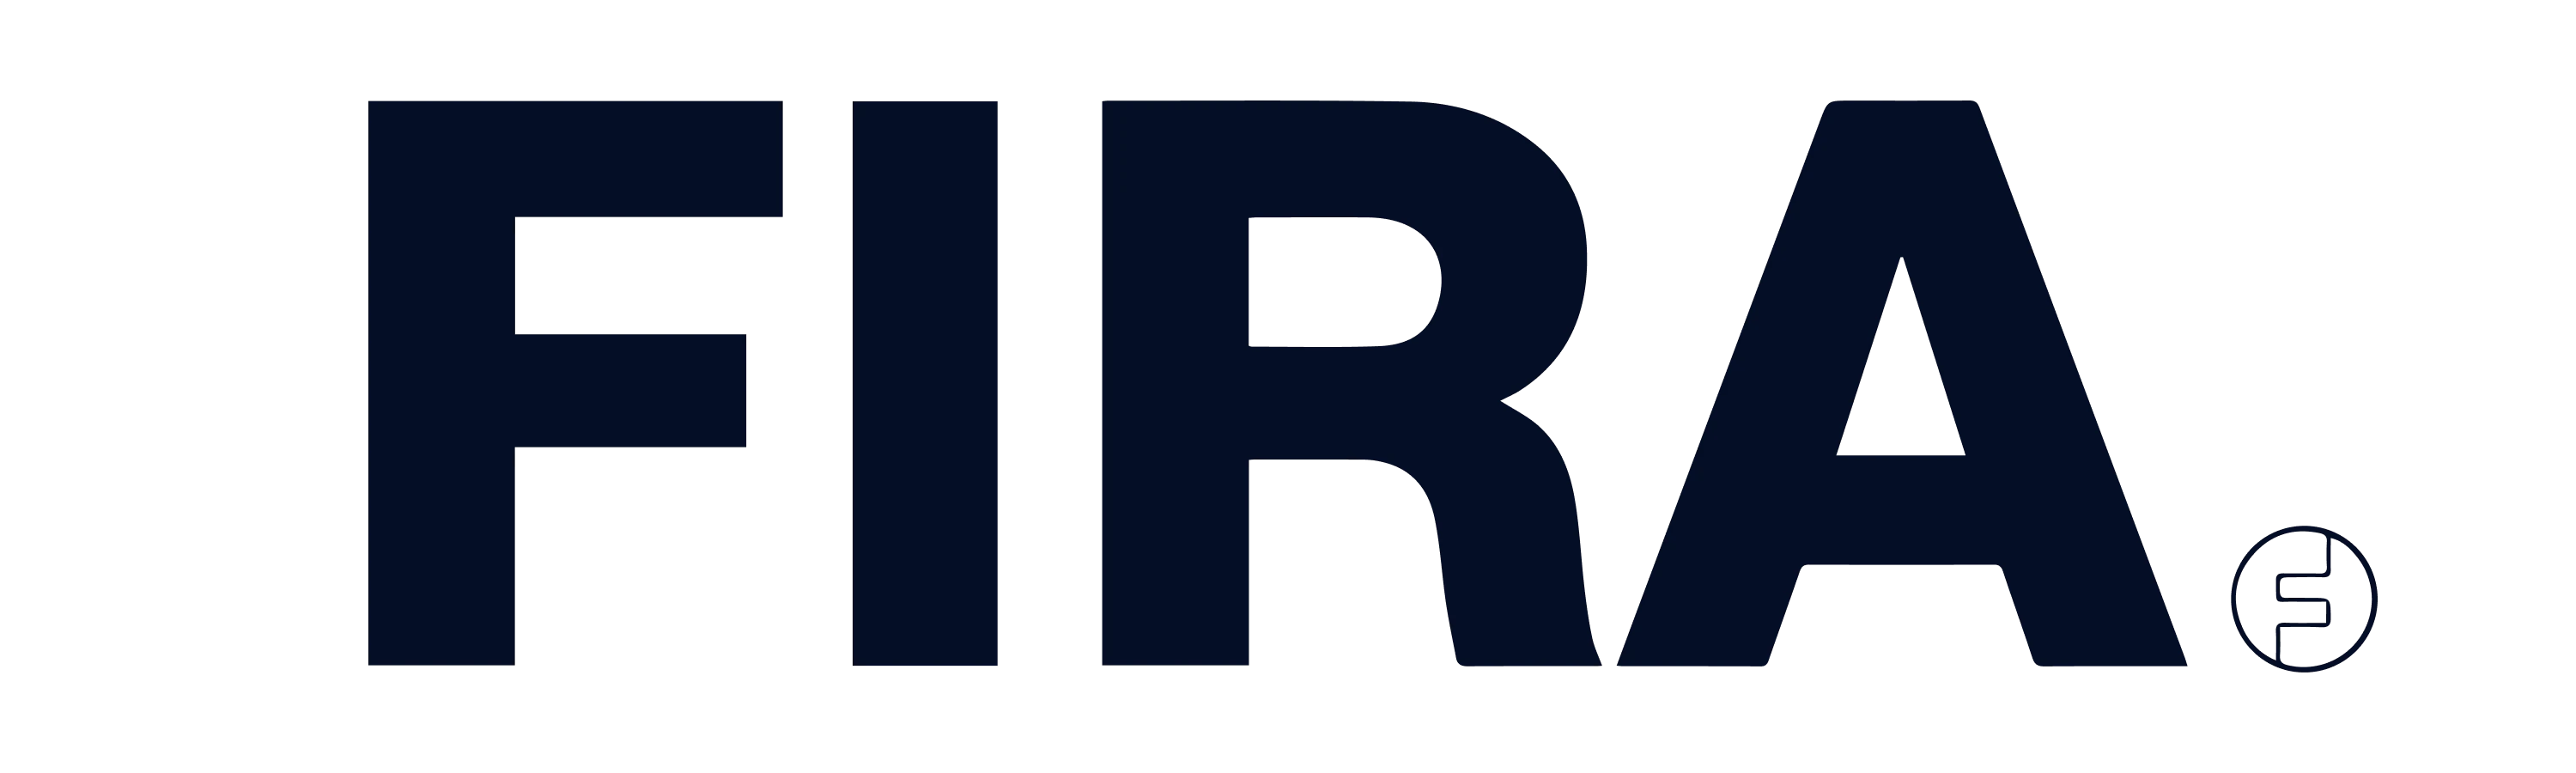 Logo Fira